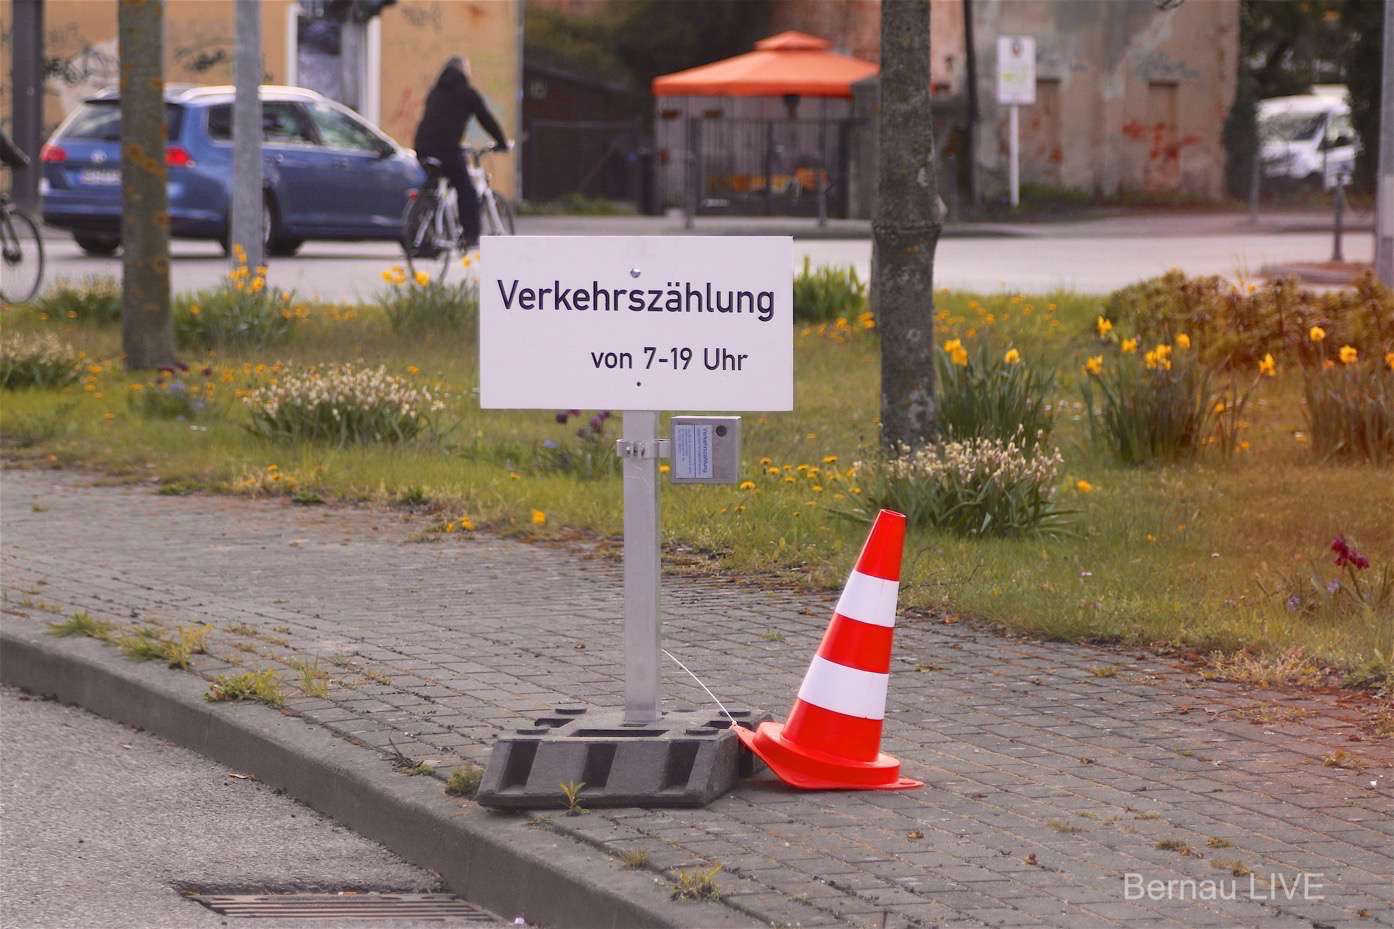 Verkehrszählung in Bernau